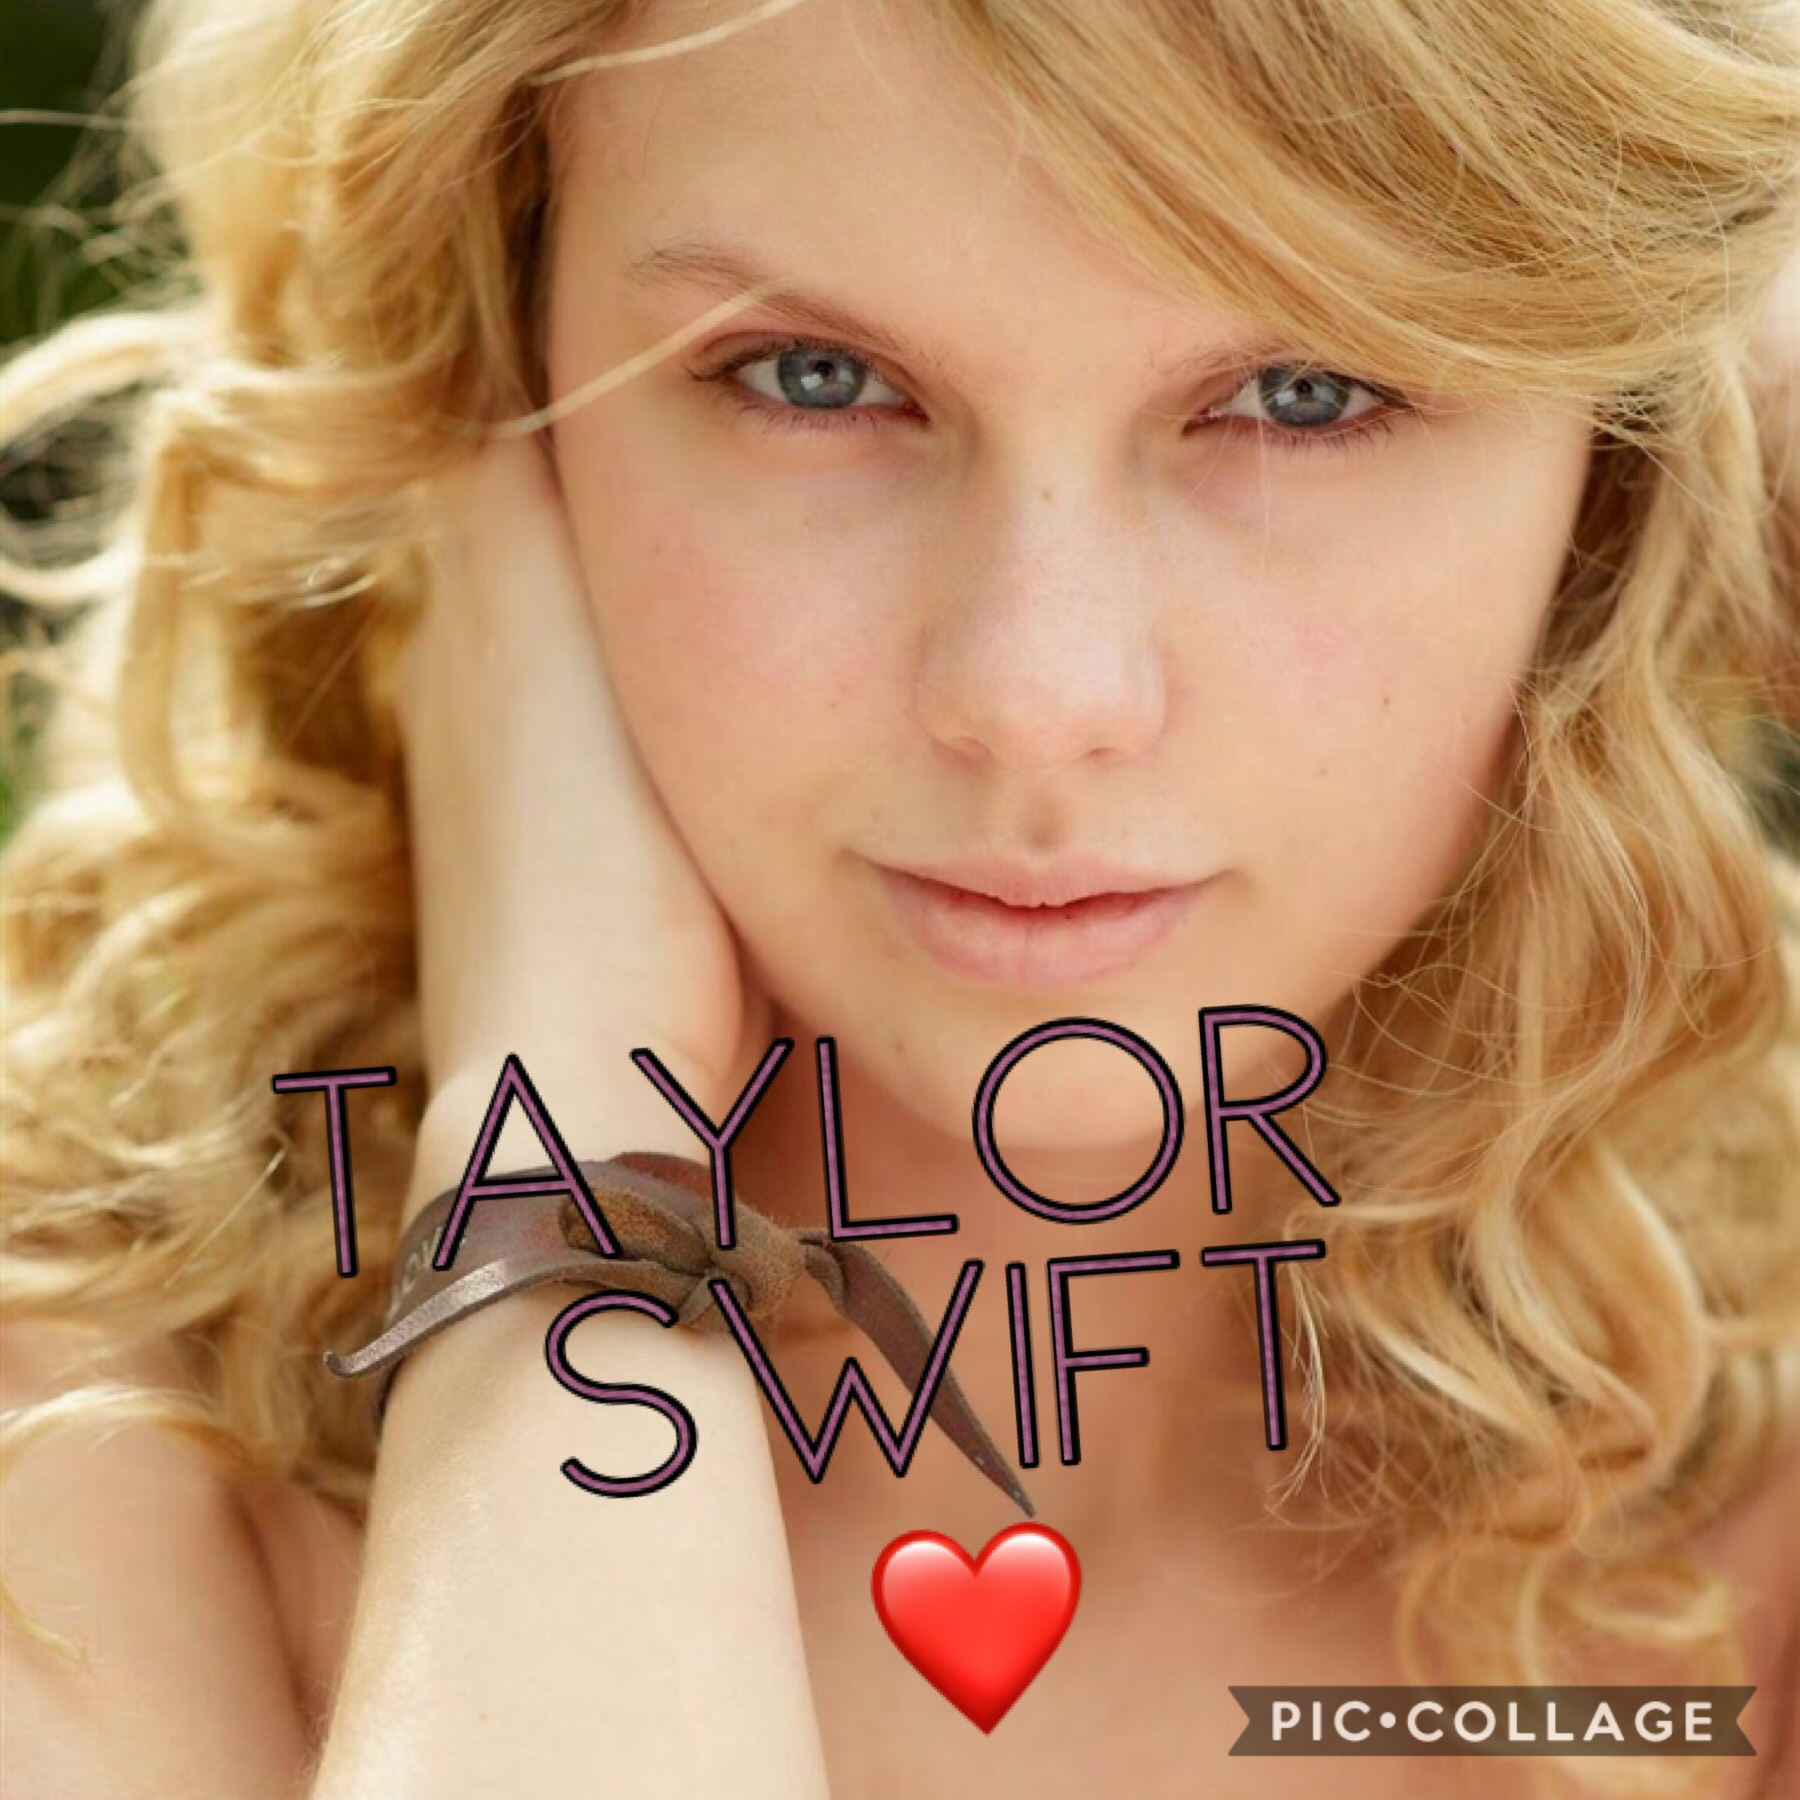 Hi! Just FYI I’m NOT Taylor Swift, I’m just a fan girl fan girling all over. Lol. I looooove TayTay so I am a big time “Swifty”. 